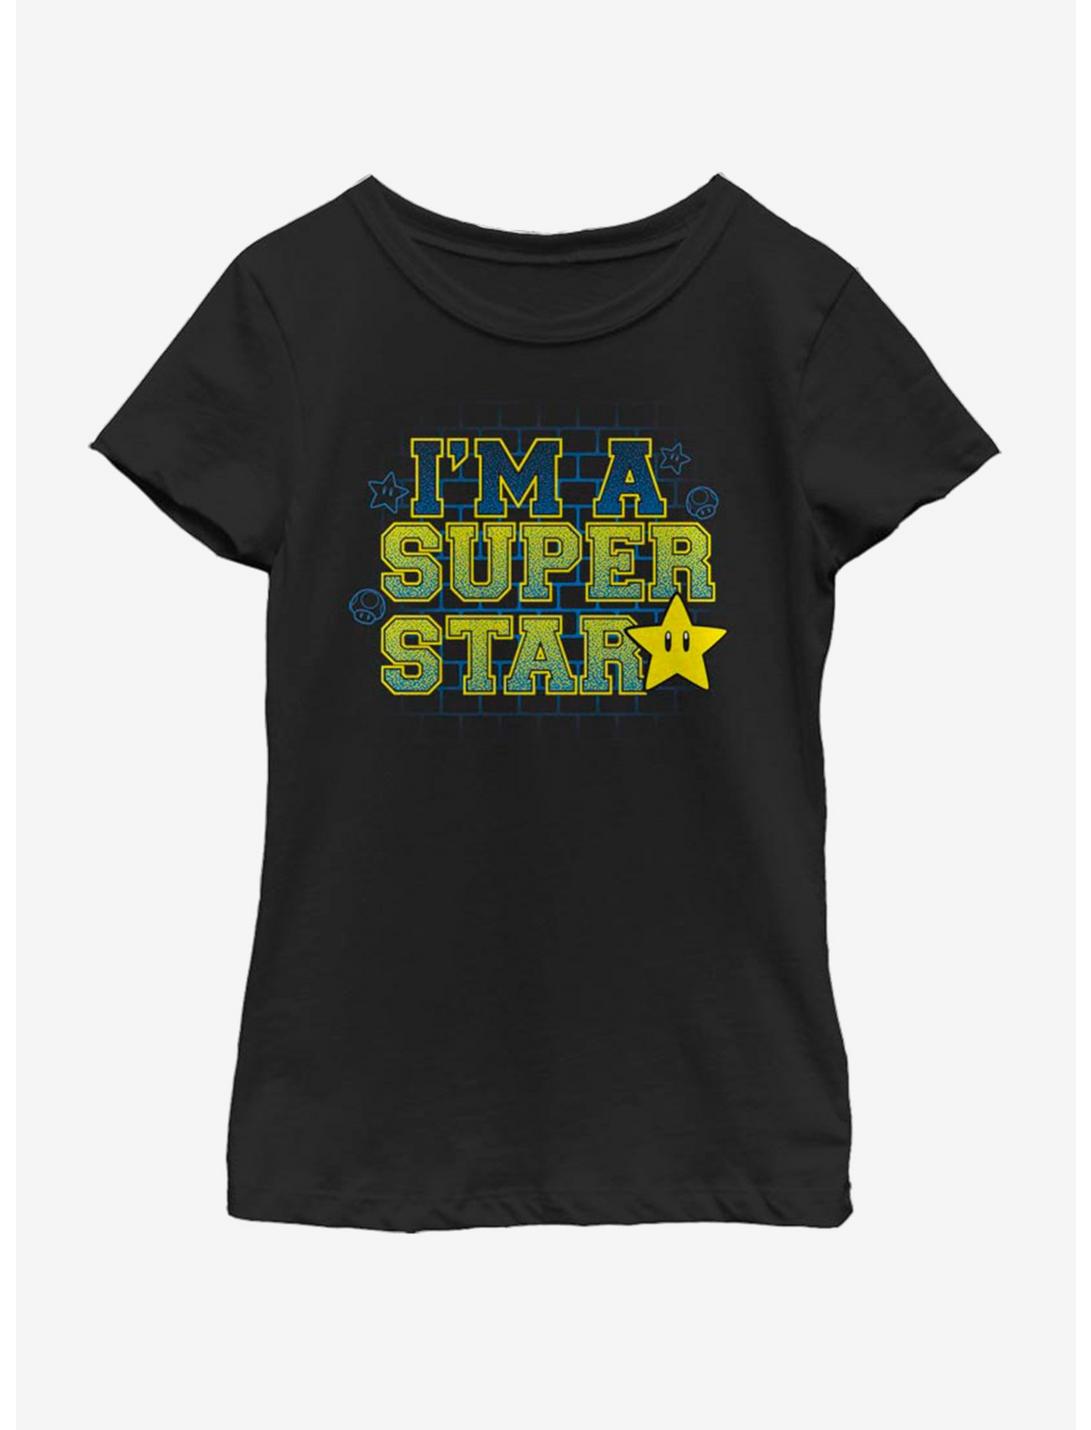 Nintendo Super Star Youth Girls T-Shirt, BLACK, hi-res